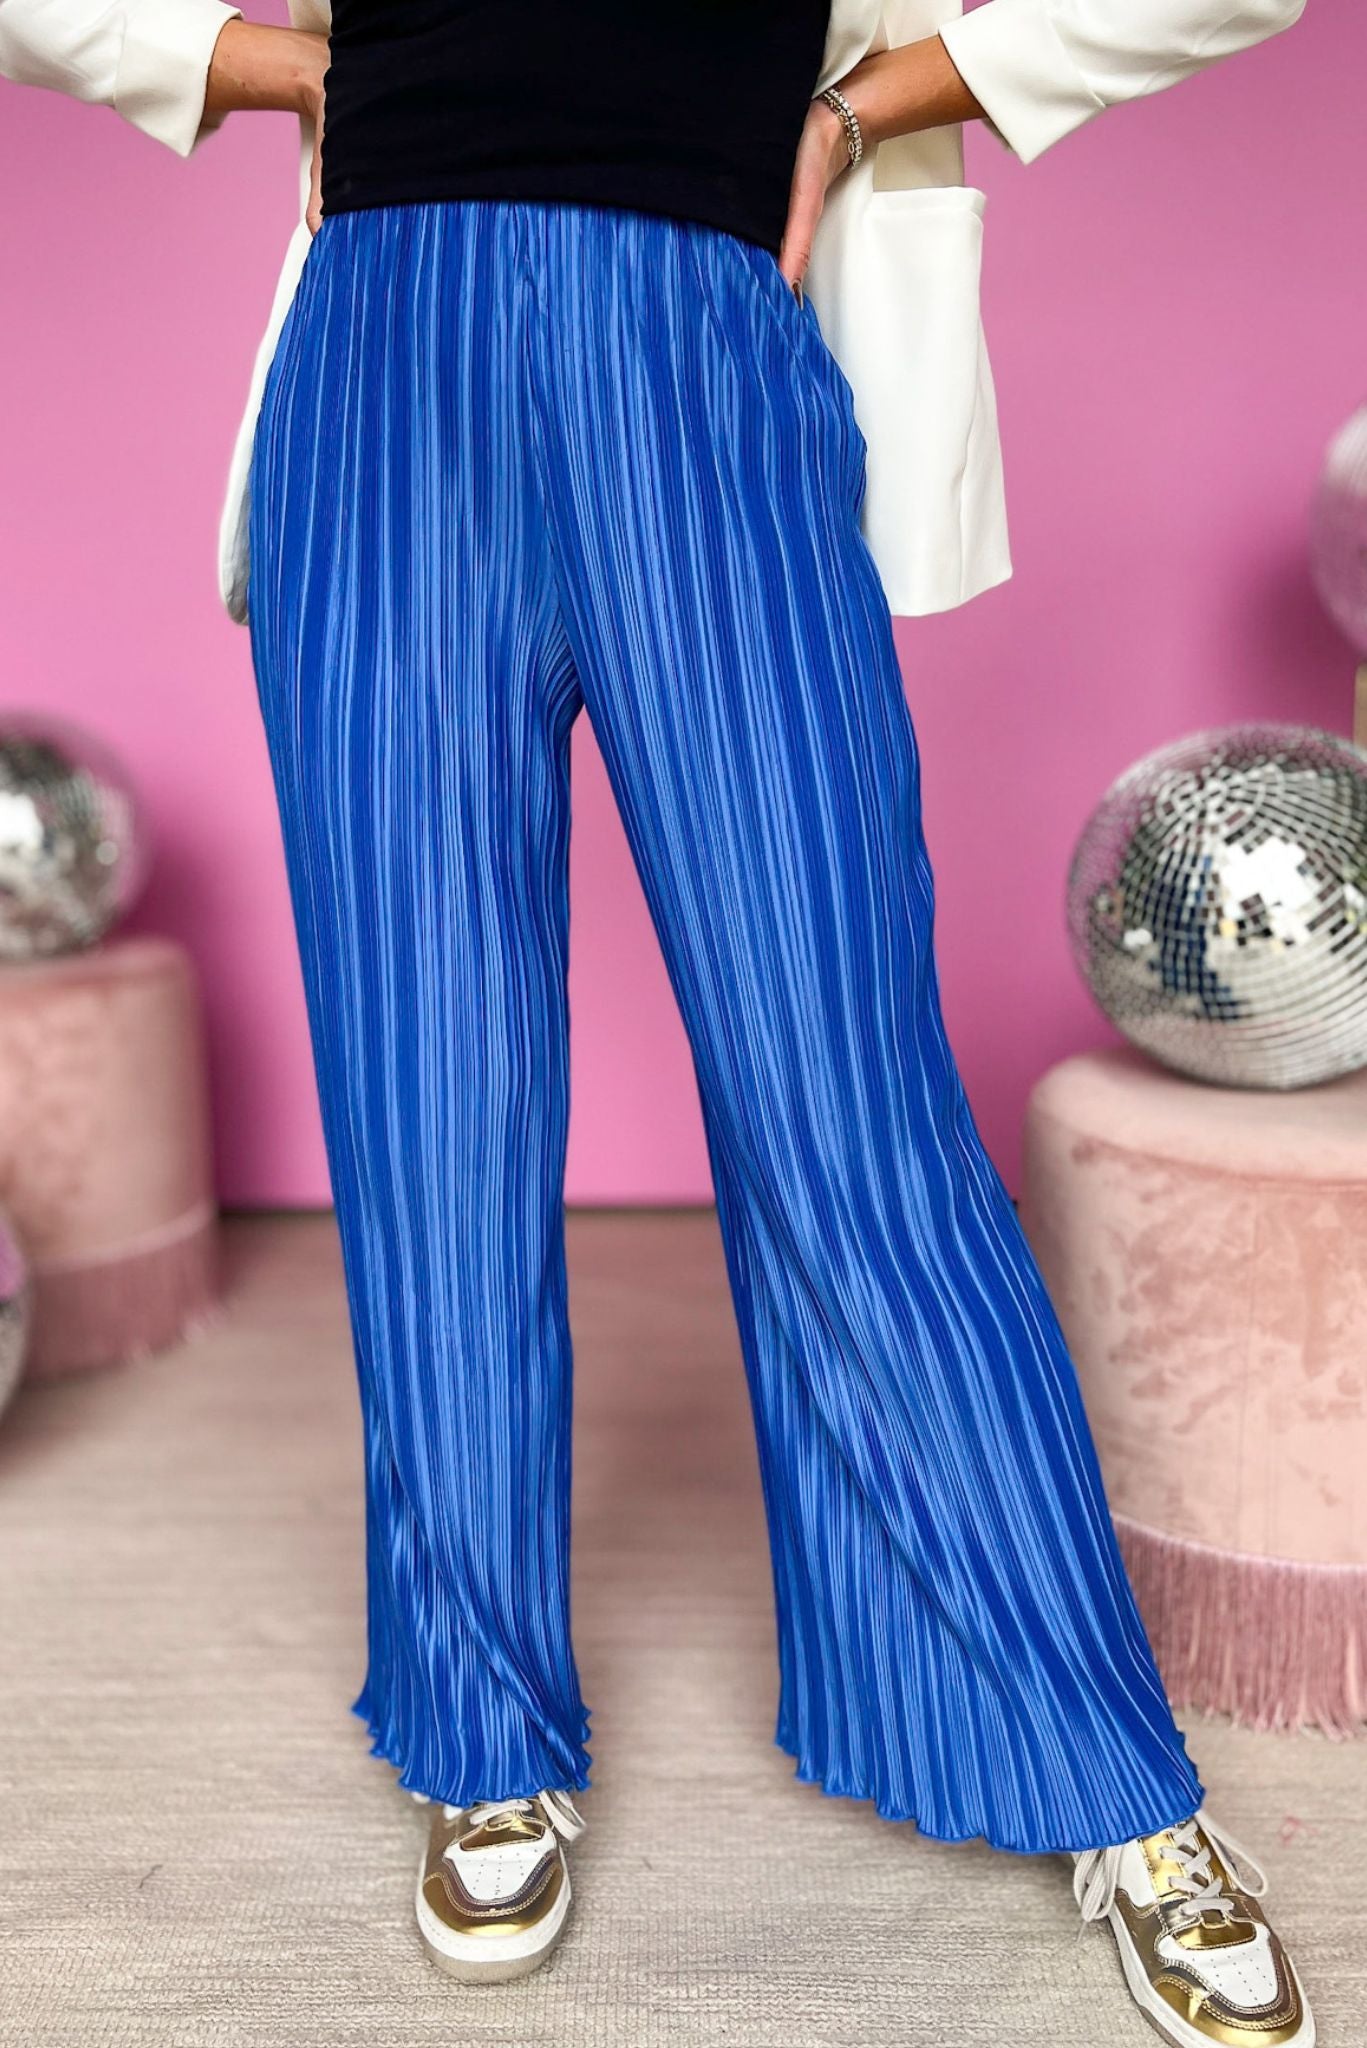 Royal Blue Plisse Pleated Pants, plisse detail, flowy fit, trendy, must have, shop style your senses by mallory fitzsimmons